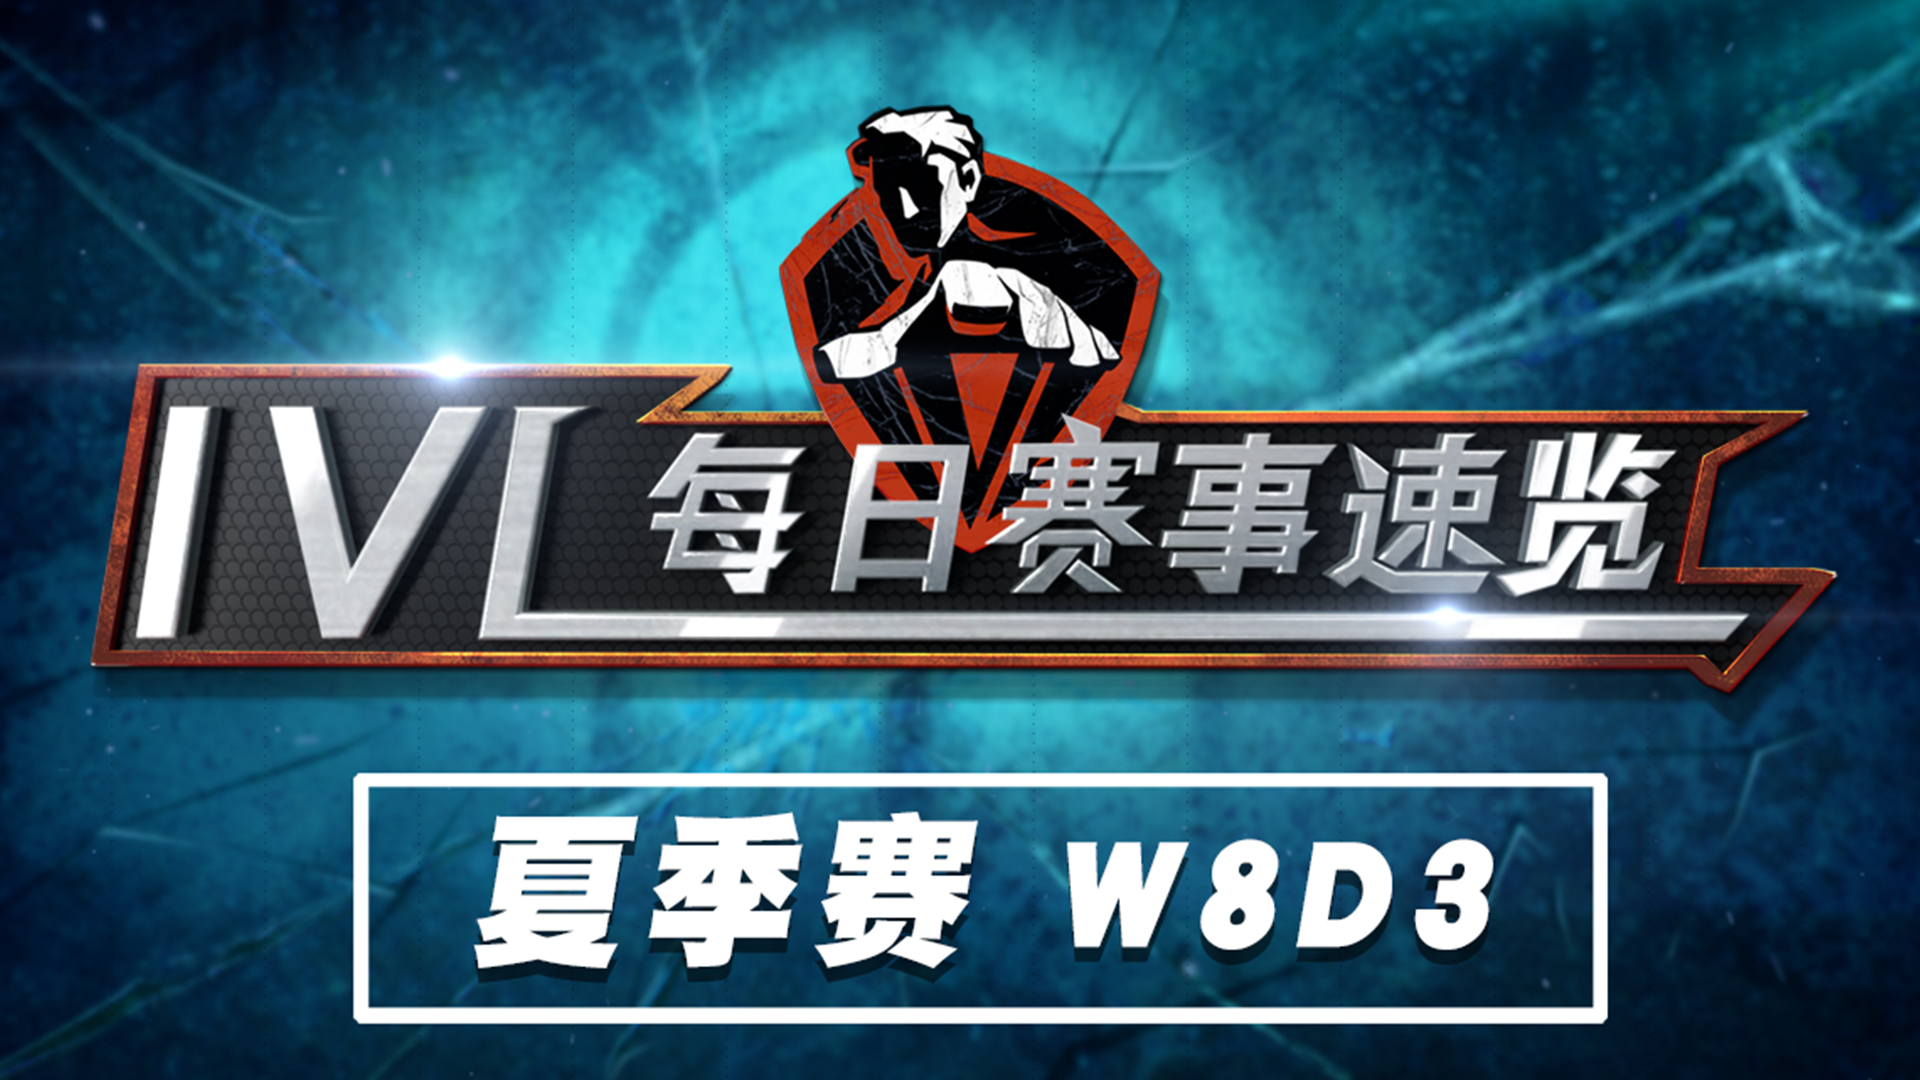 【2020IVL】夏季赛W8D3 赛事速览